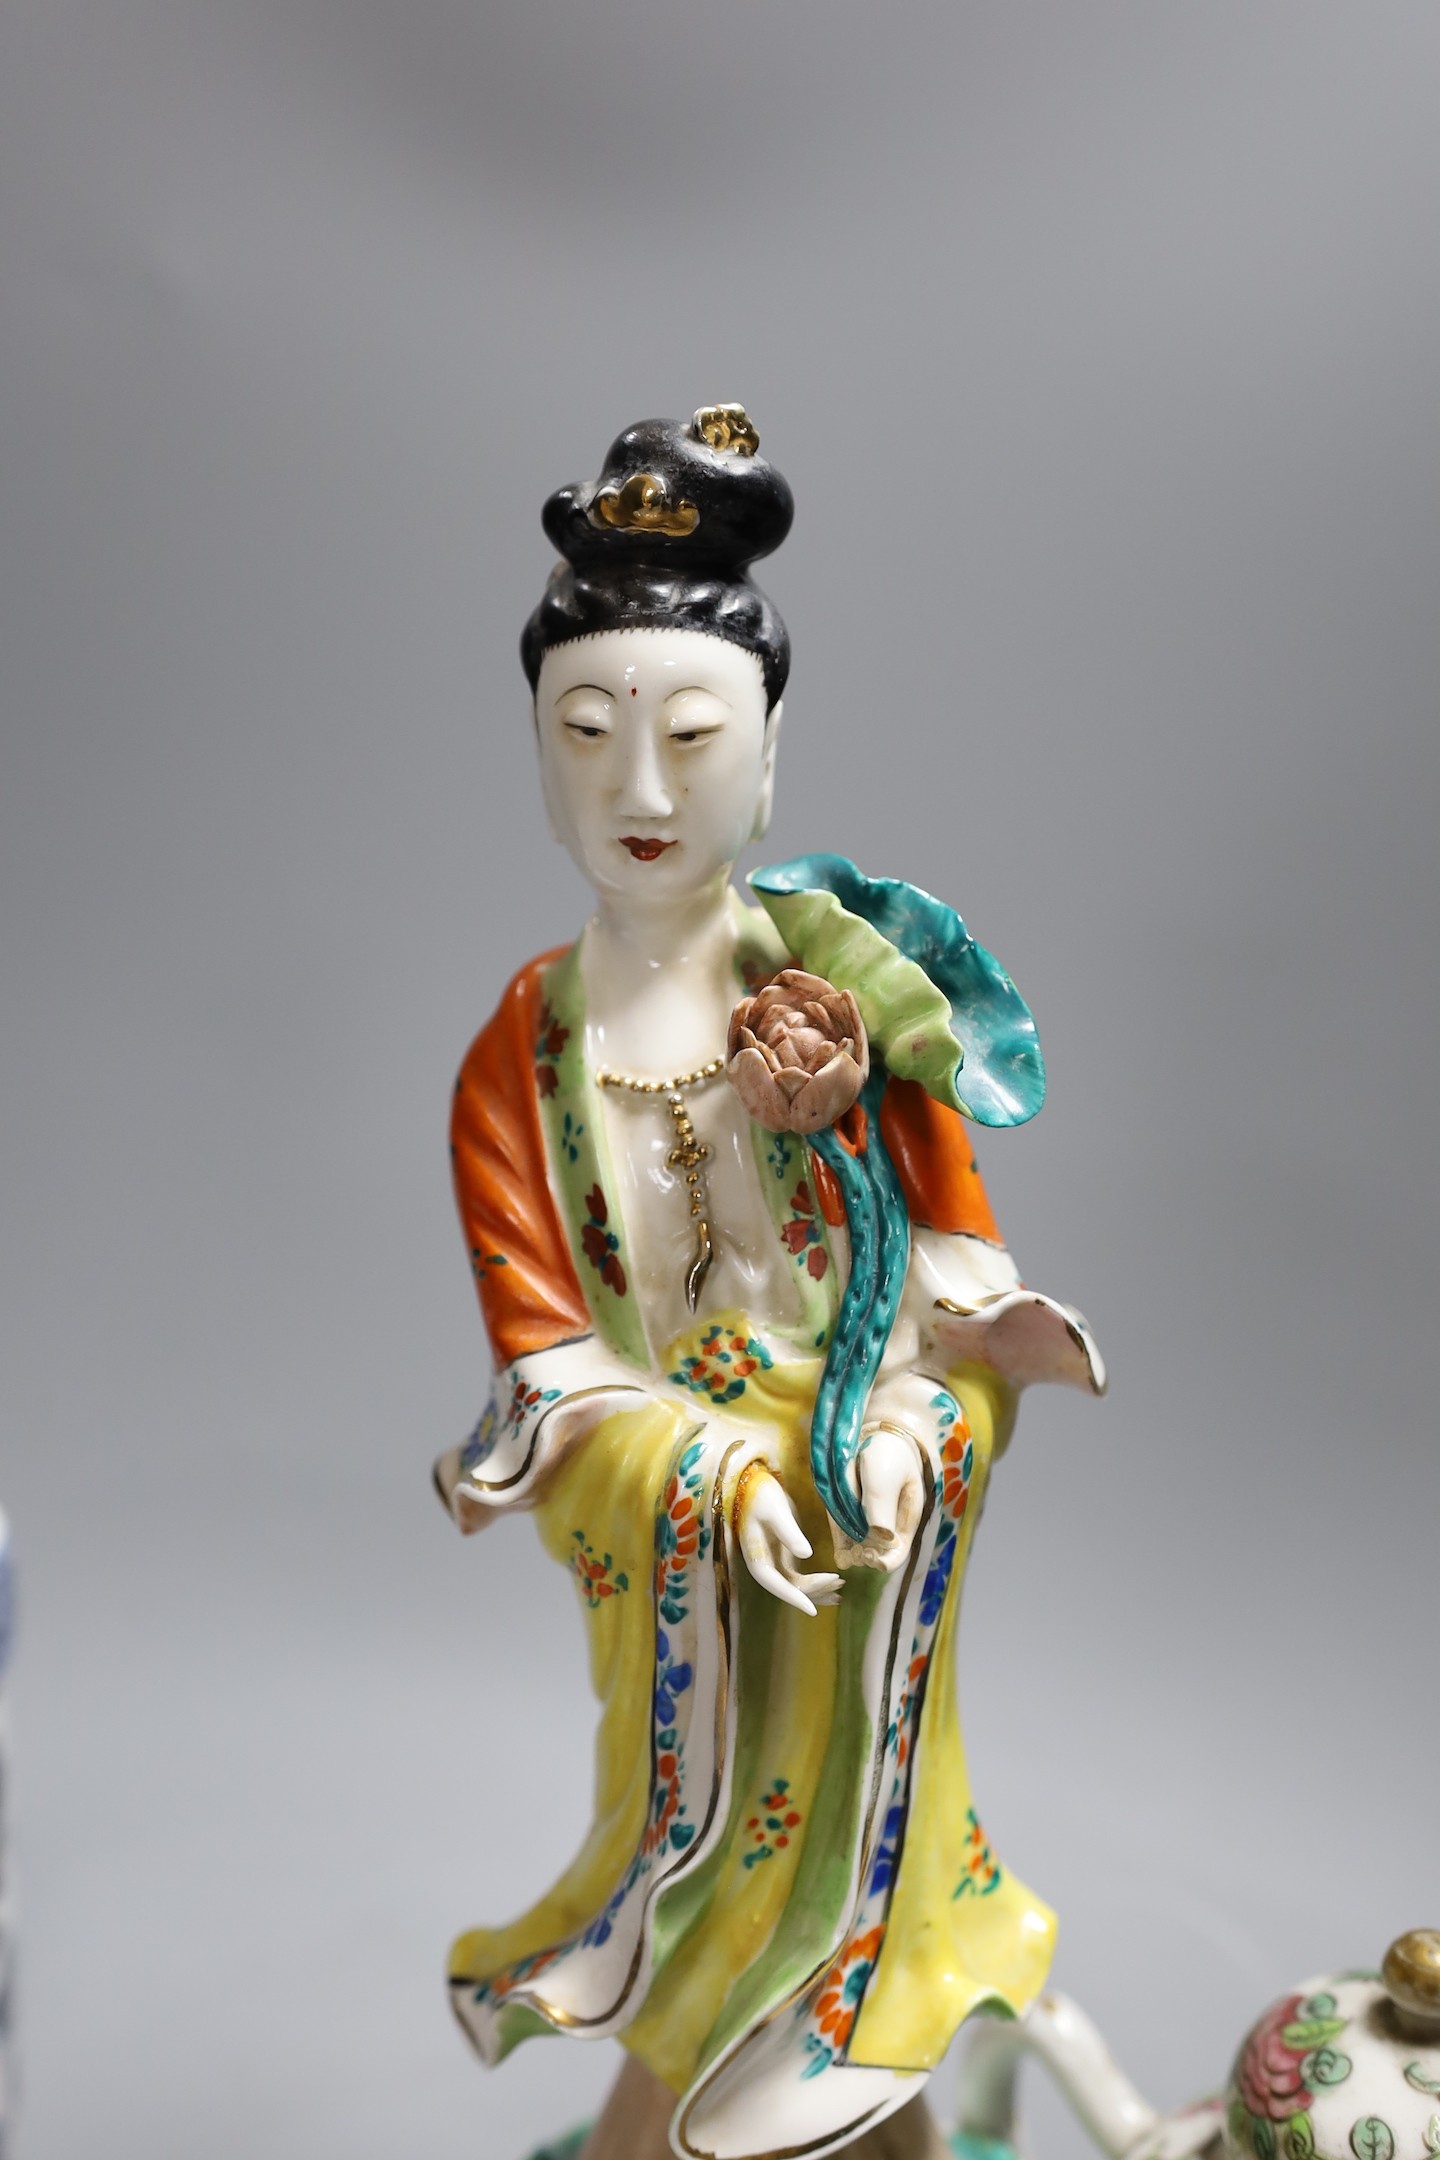 A group of mixed Asian ceramics, figurine 30 cms high